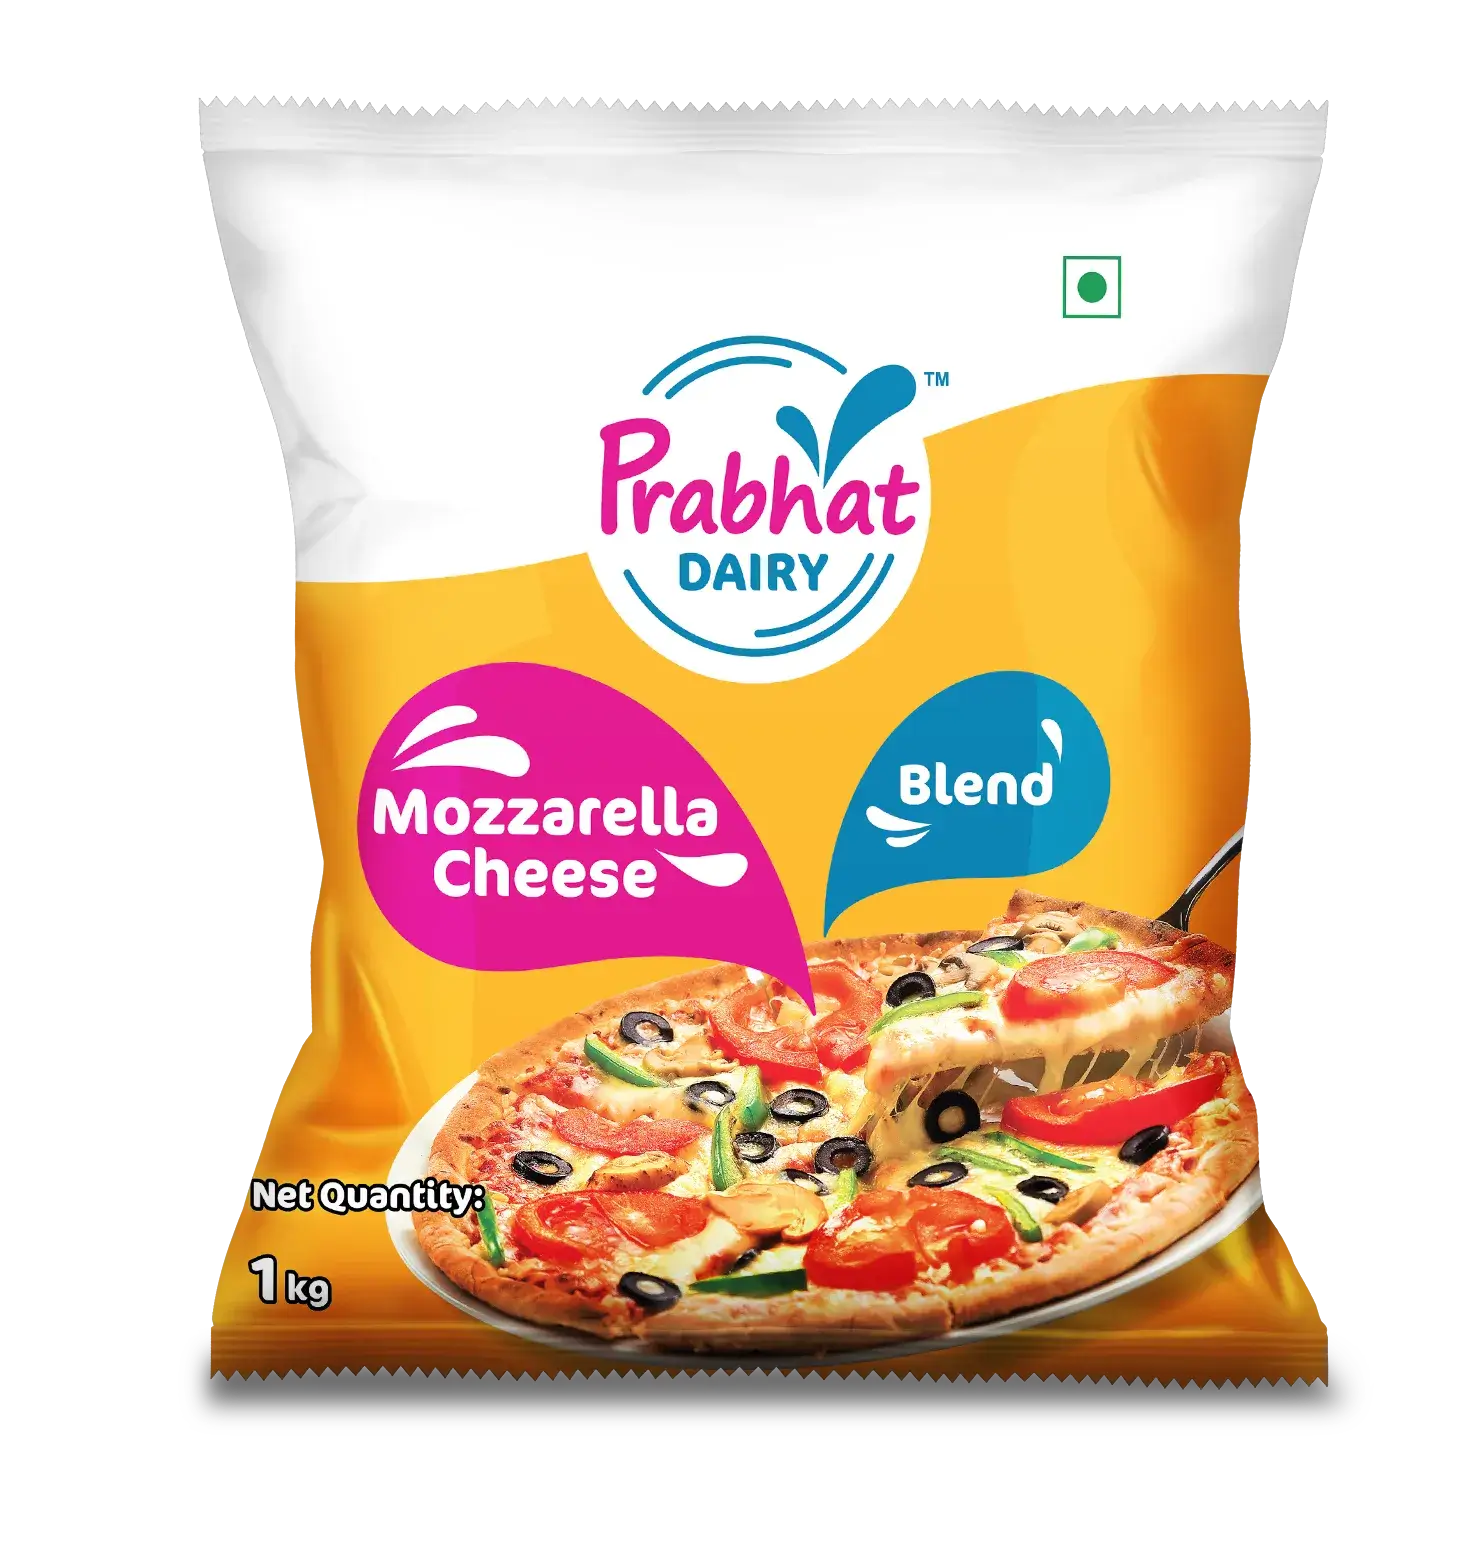 Prabhat Dairy Cheese Mozzarella Blend Pouch 1kg